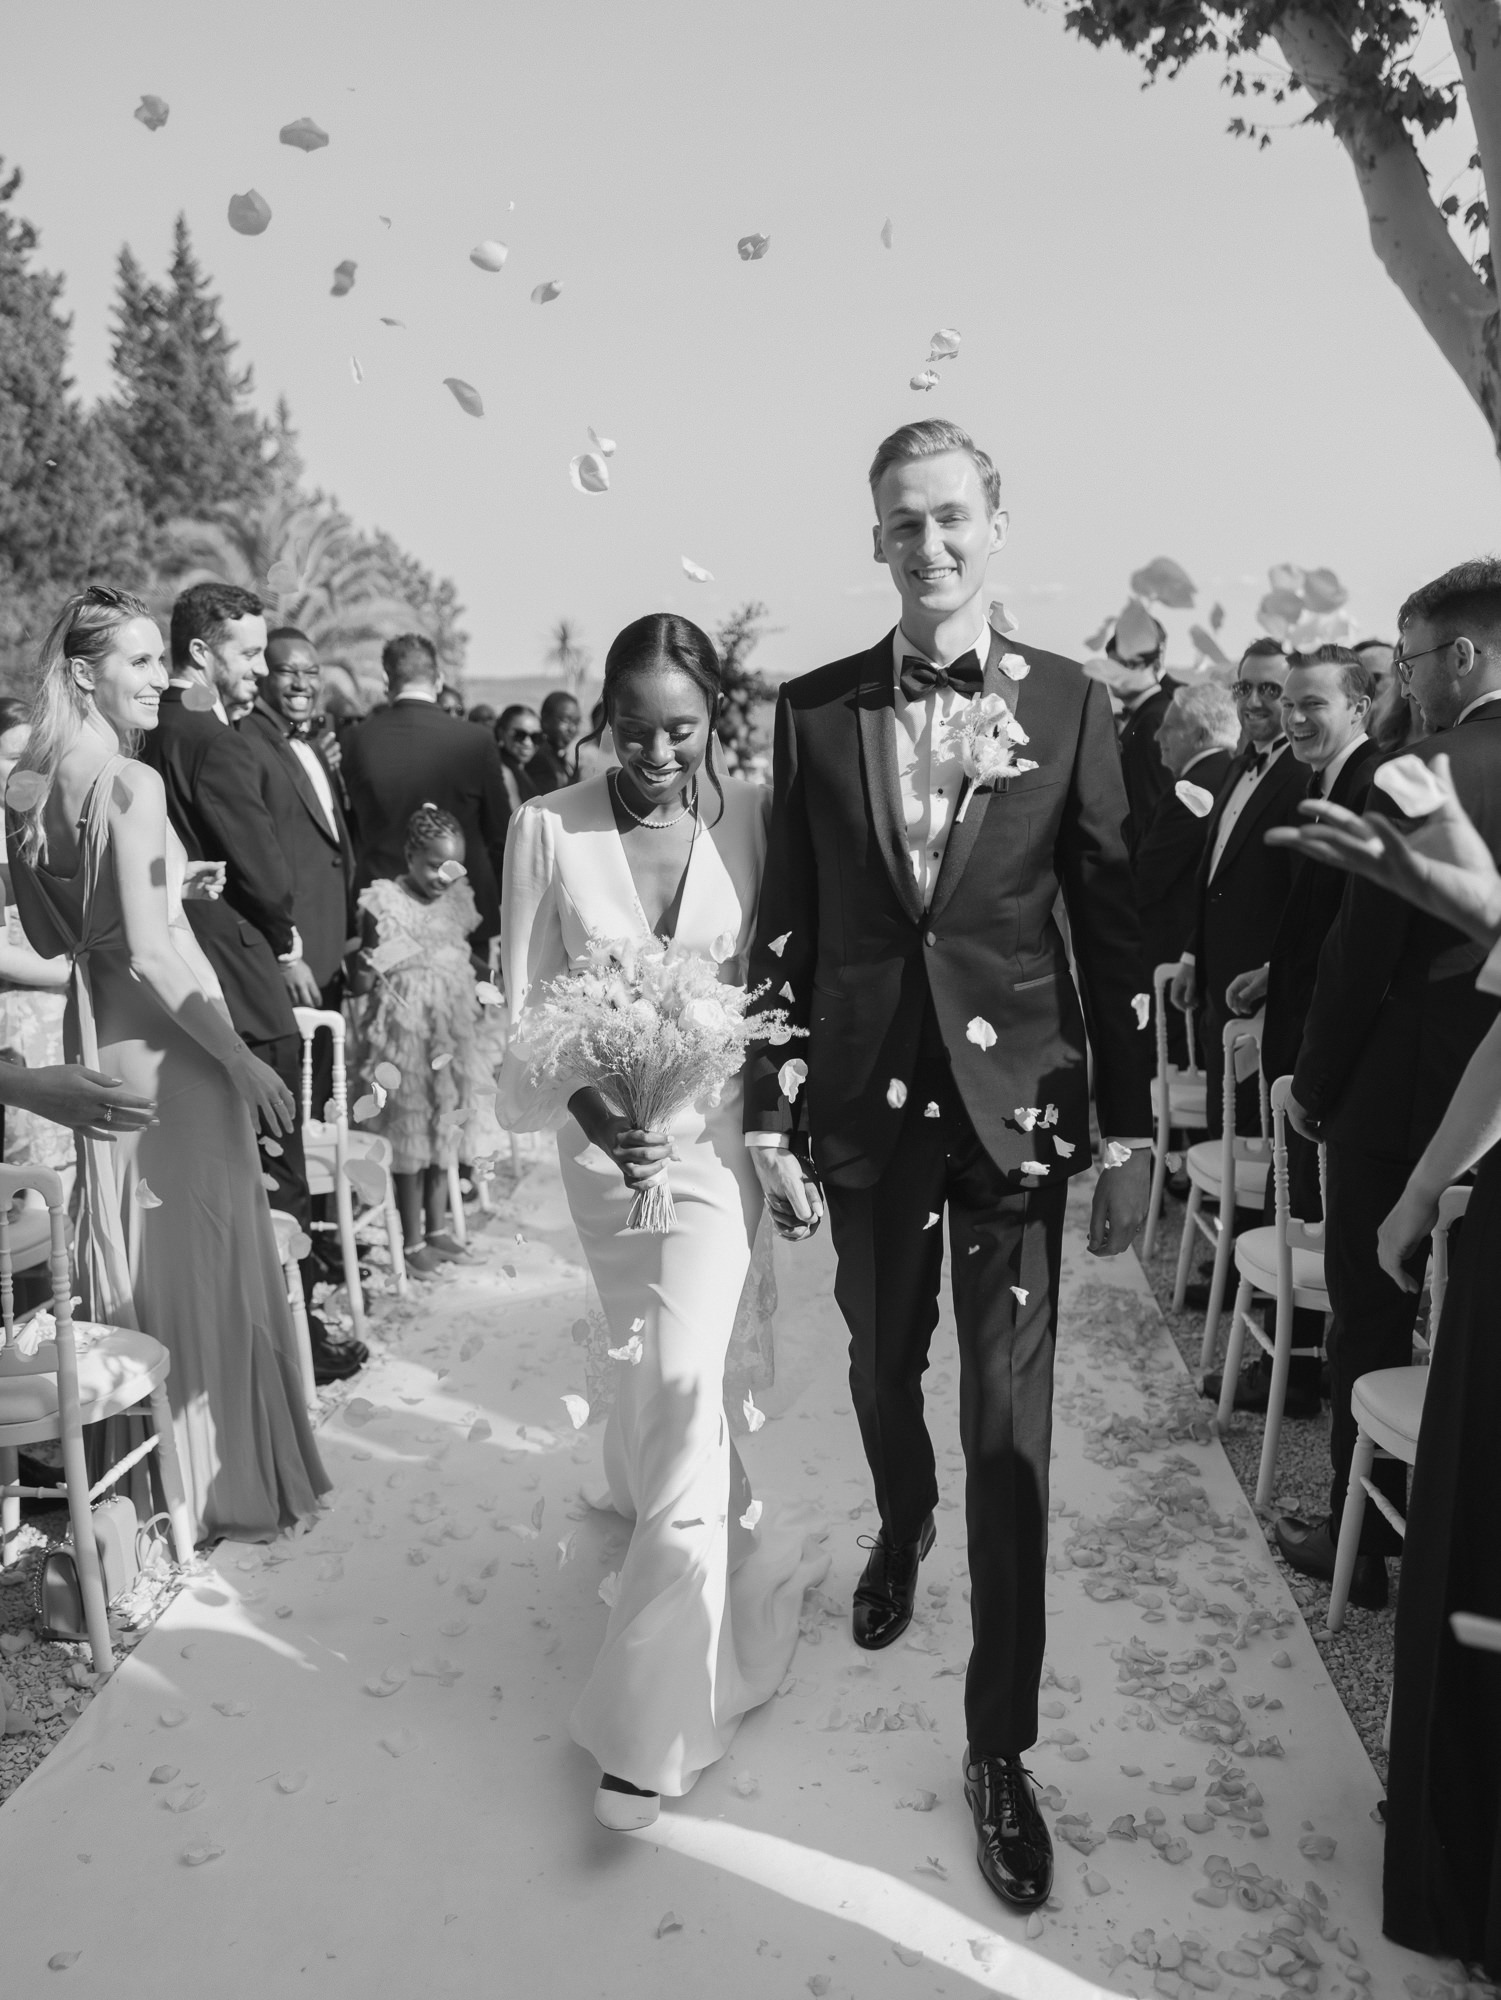 Couple picture in black & white exiting the ceremony at Chateau de la Roque Forcade